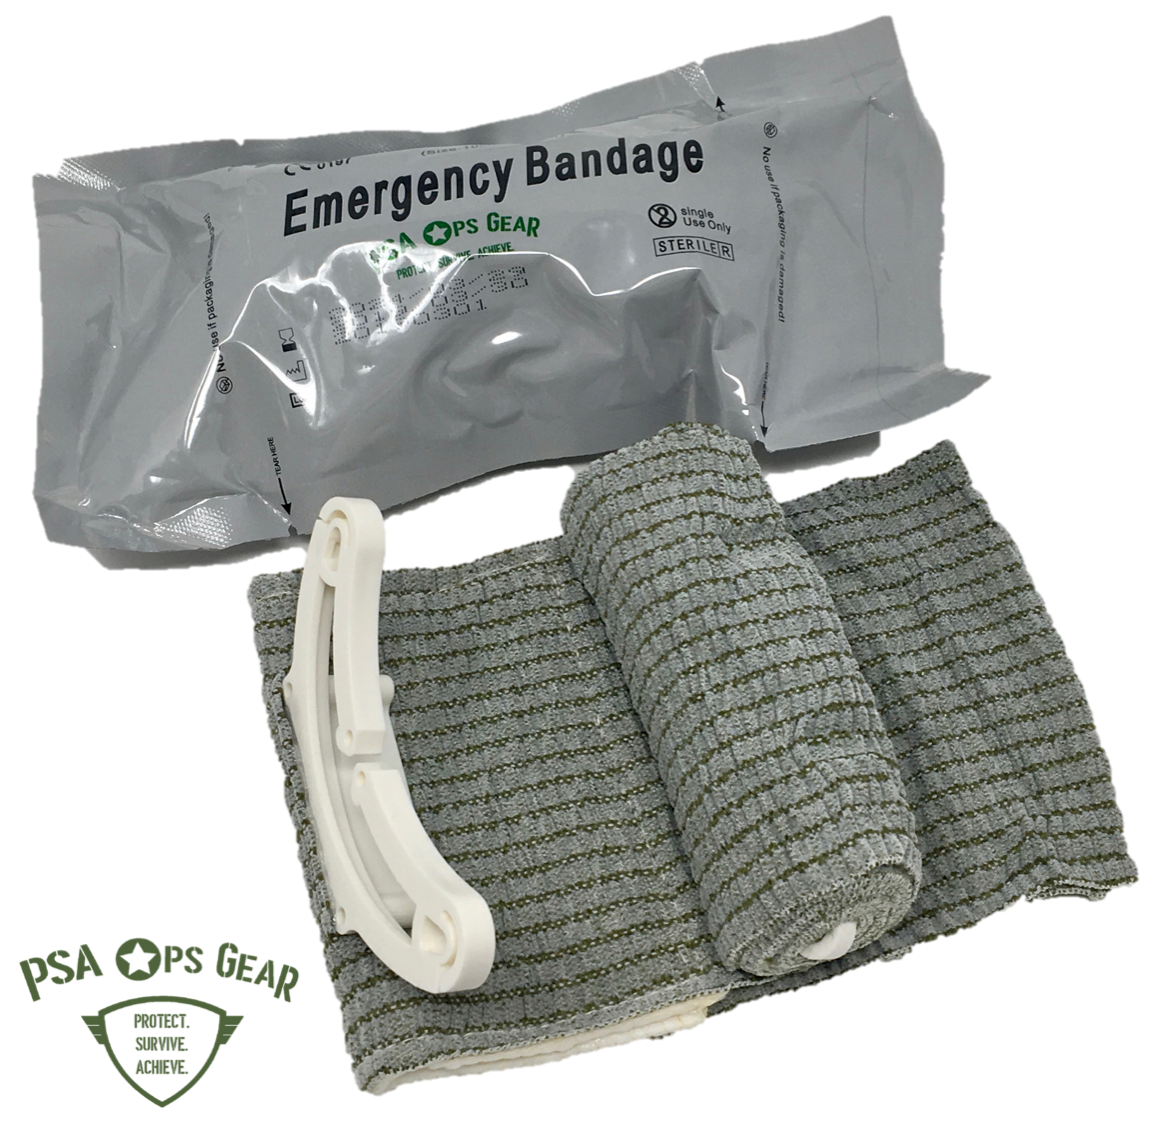 Trauma Pack for Hemorrhage and Limb Injury (with Aluminum Splint + Combat Emergency Bandage) - AllaQuix™ - Stop Bleeding Quick Like the Pros!